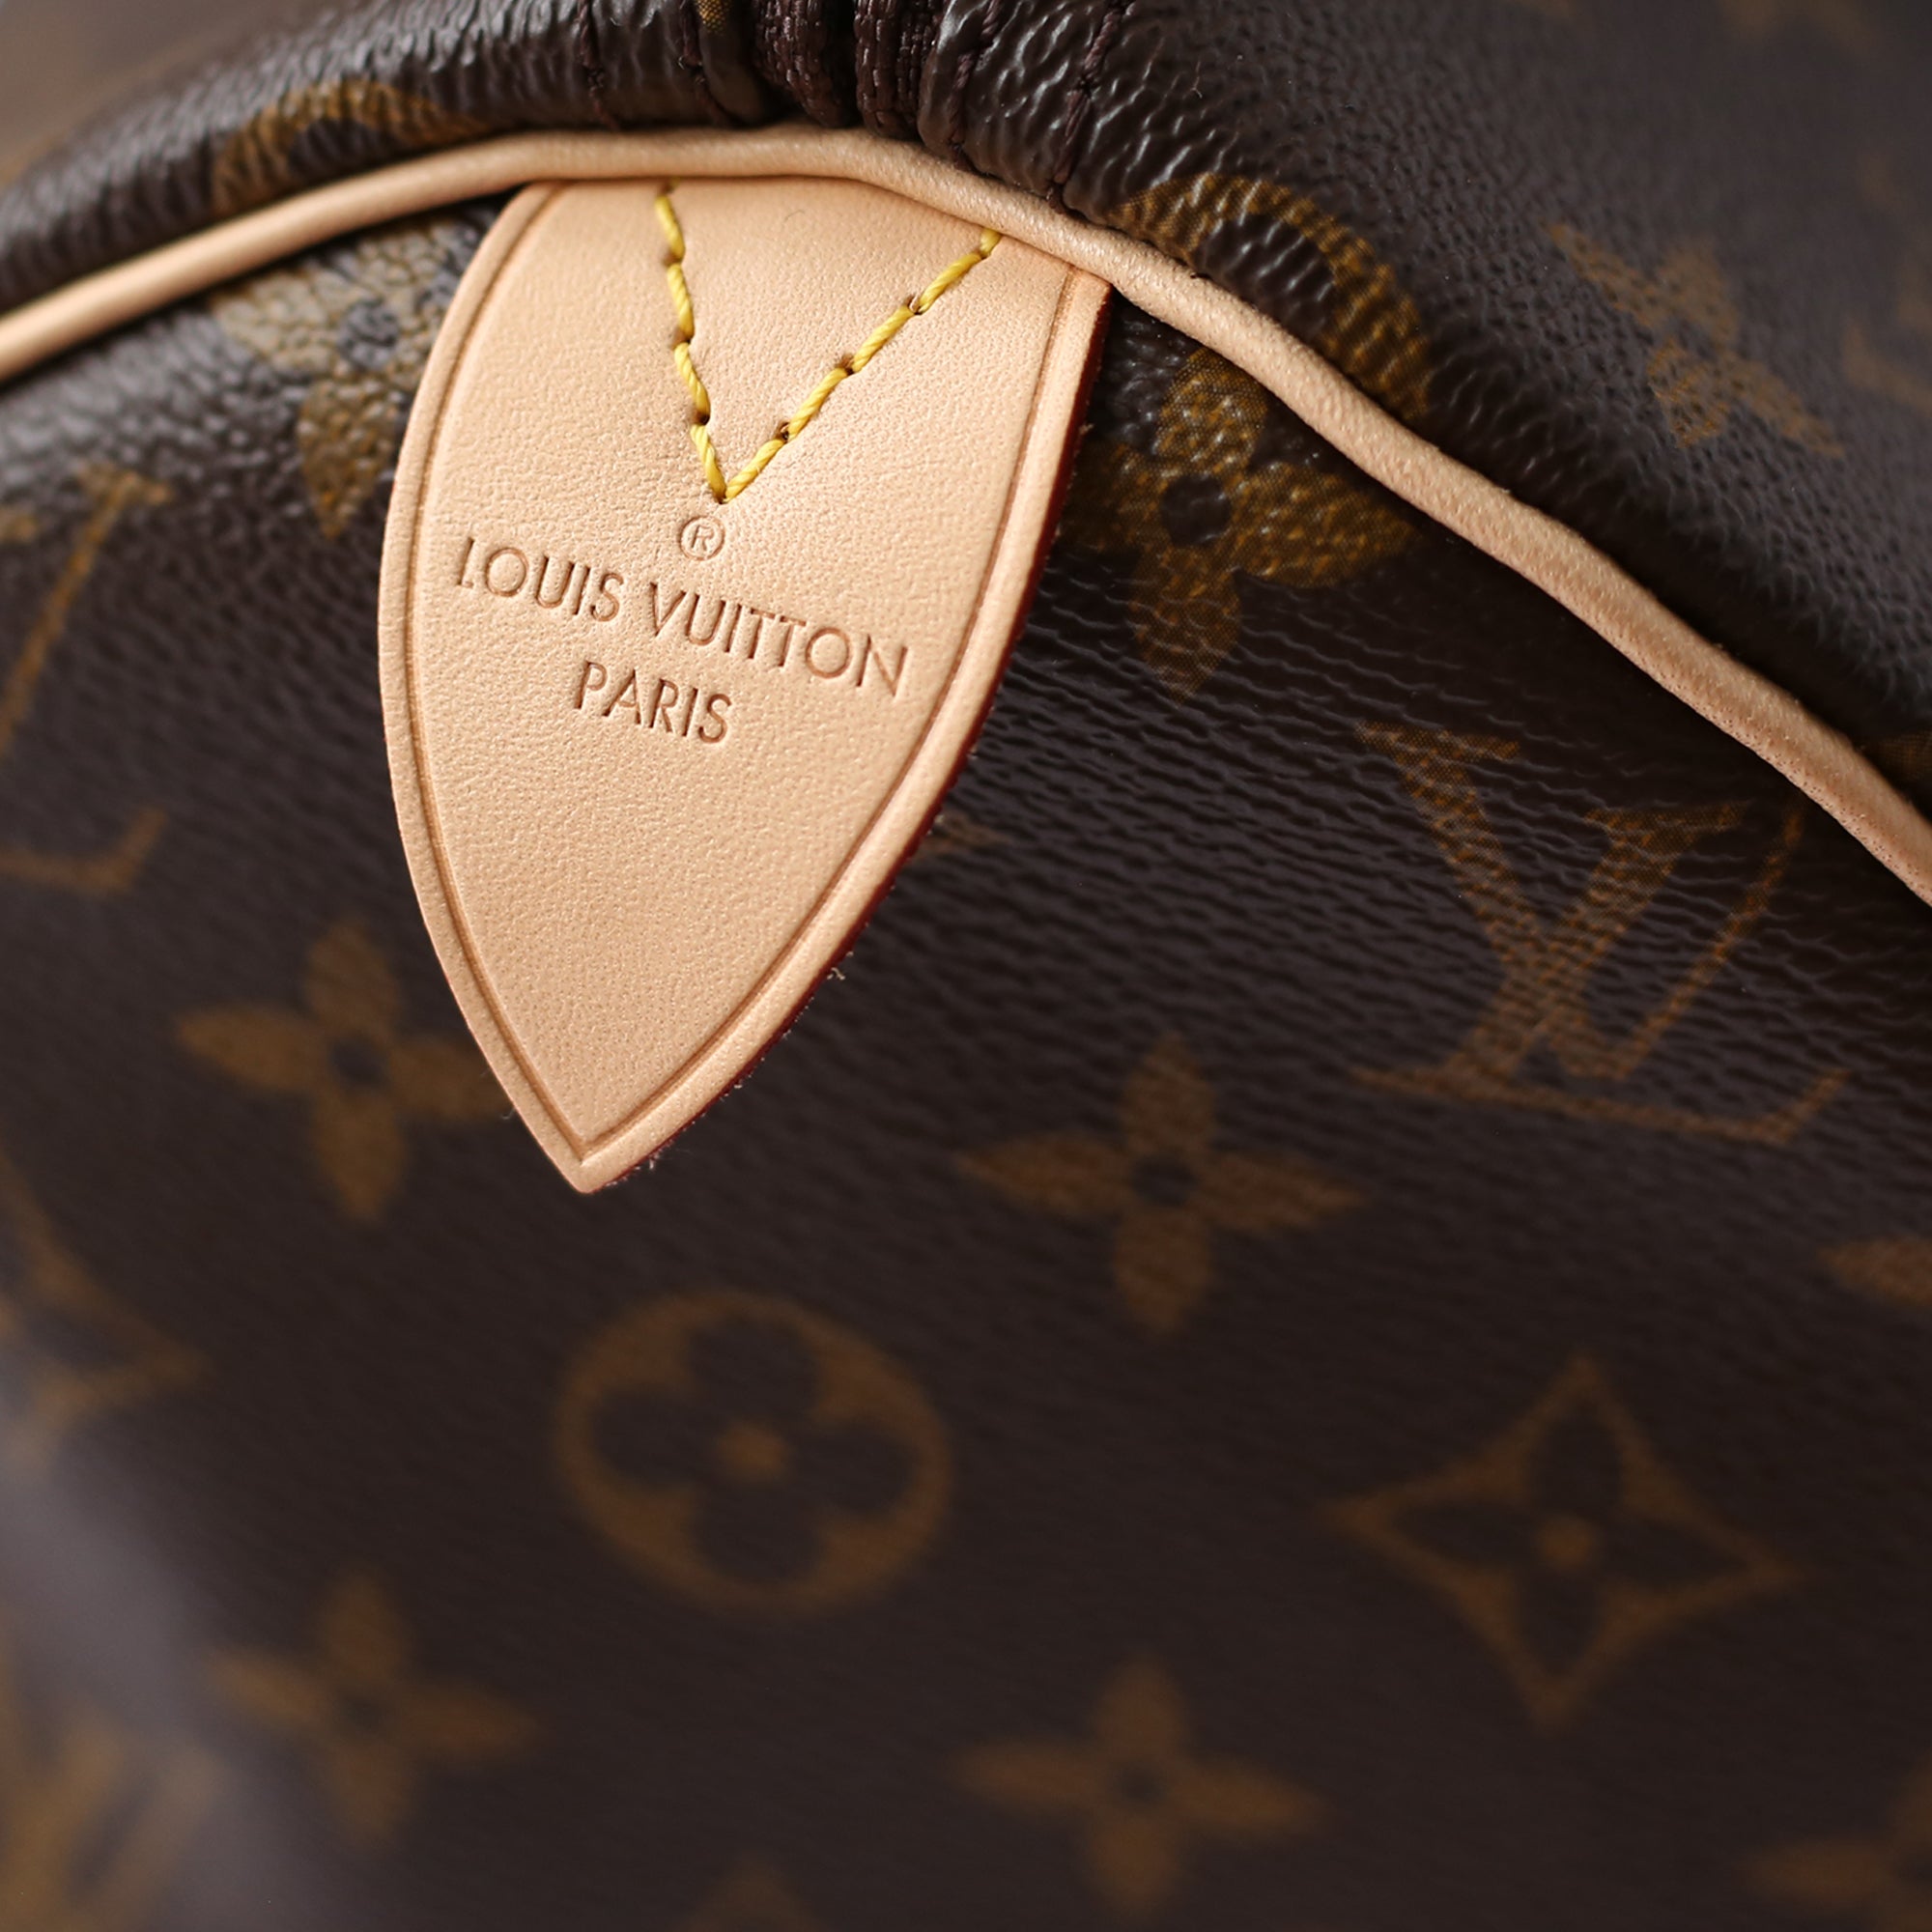 Louis Vuitton Speedy Sizes: An Overview